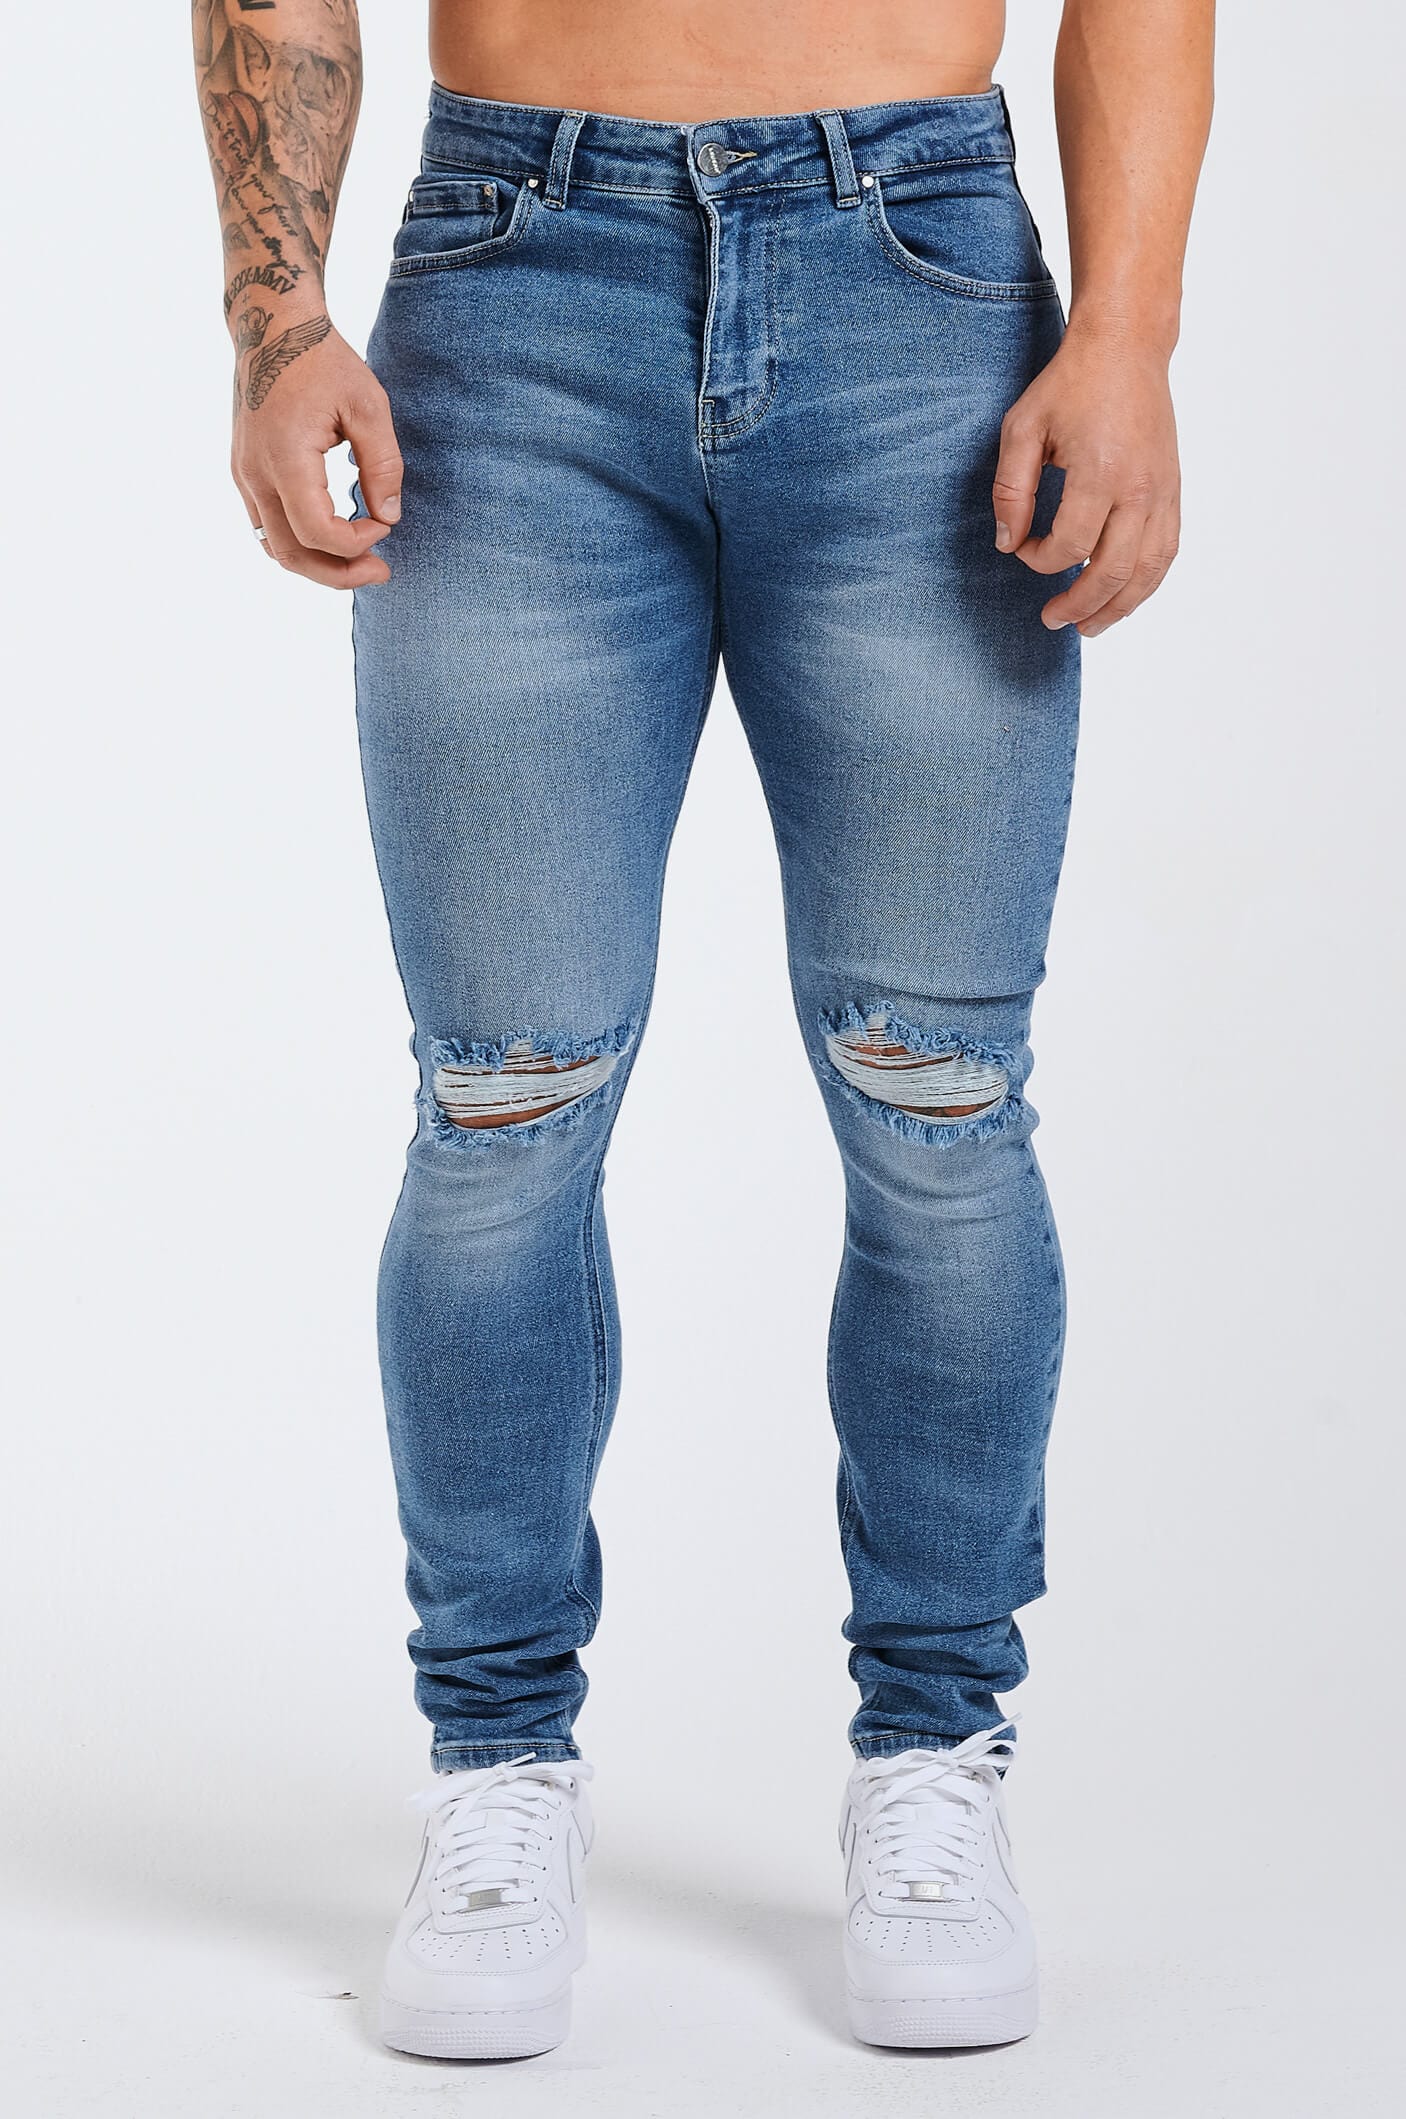 Legend London Jeans - slim 2.0 SLIM FIT JEANS 2.0 ESSENTIAL RIPPED - BLUE WASH